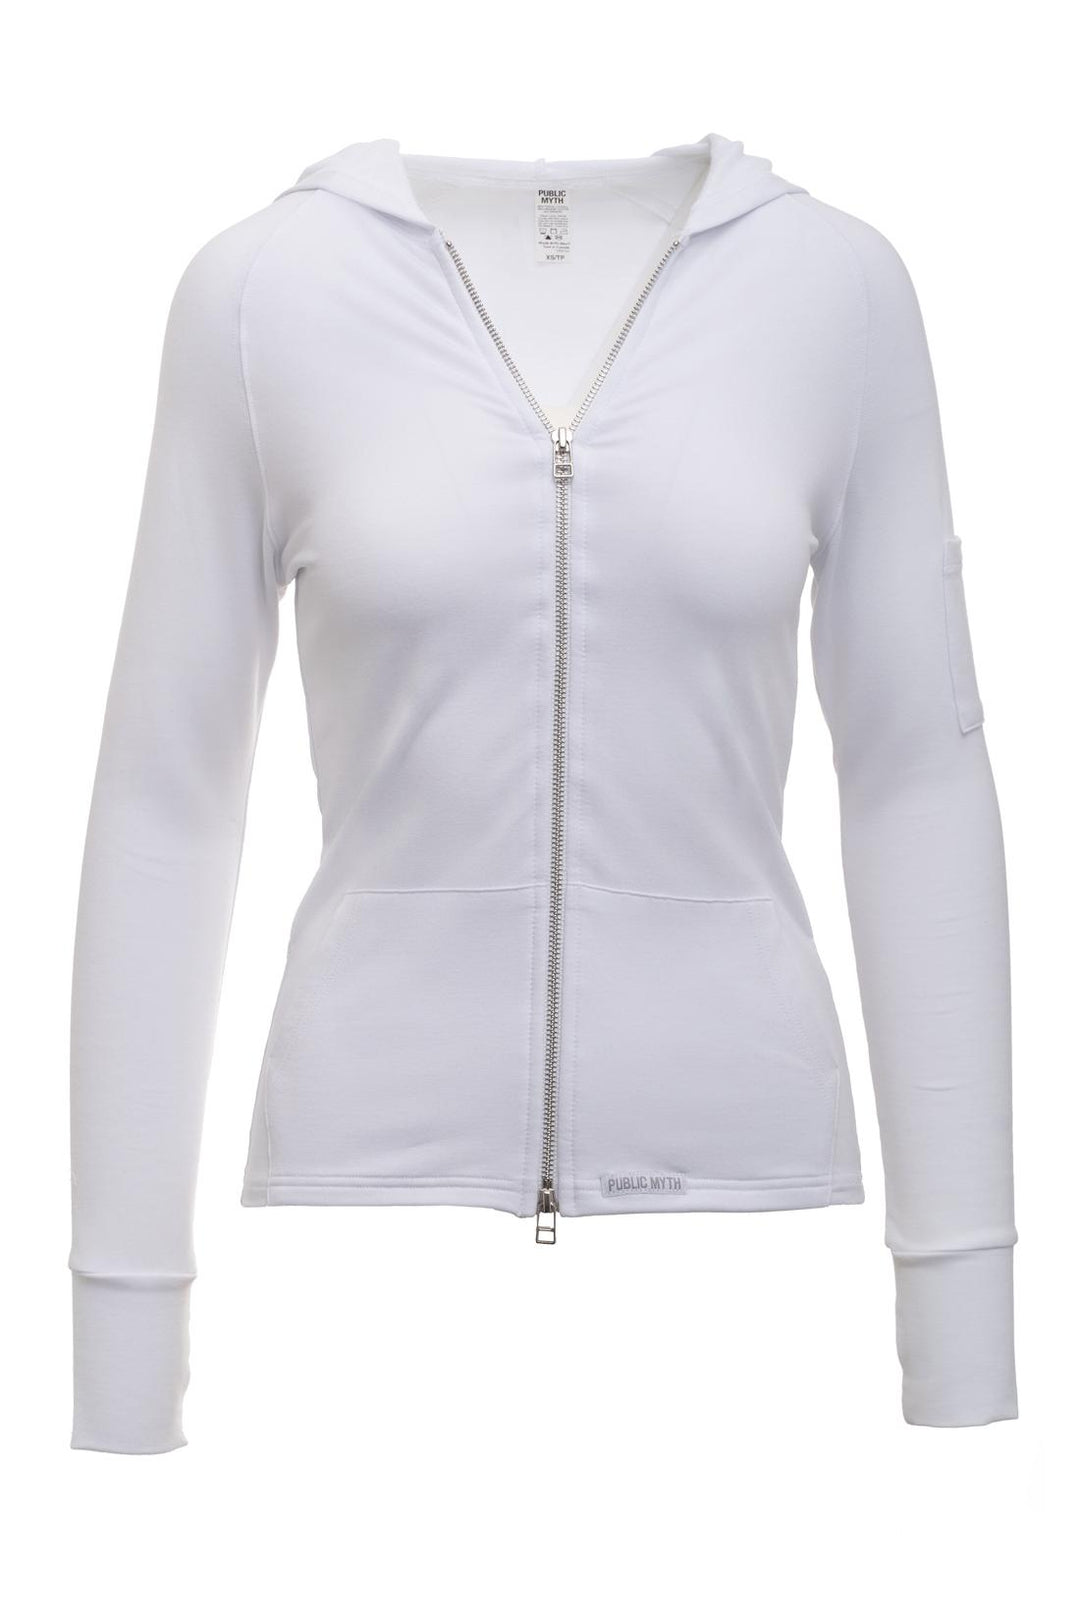 White zip up hoodie for women